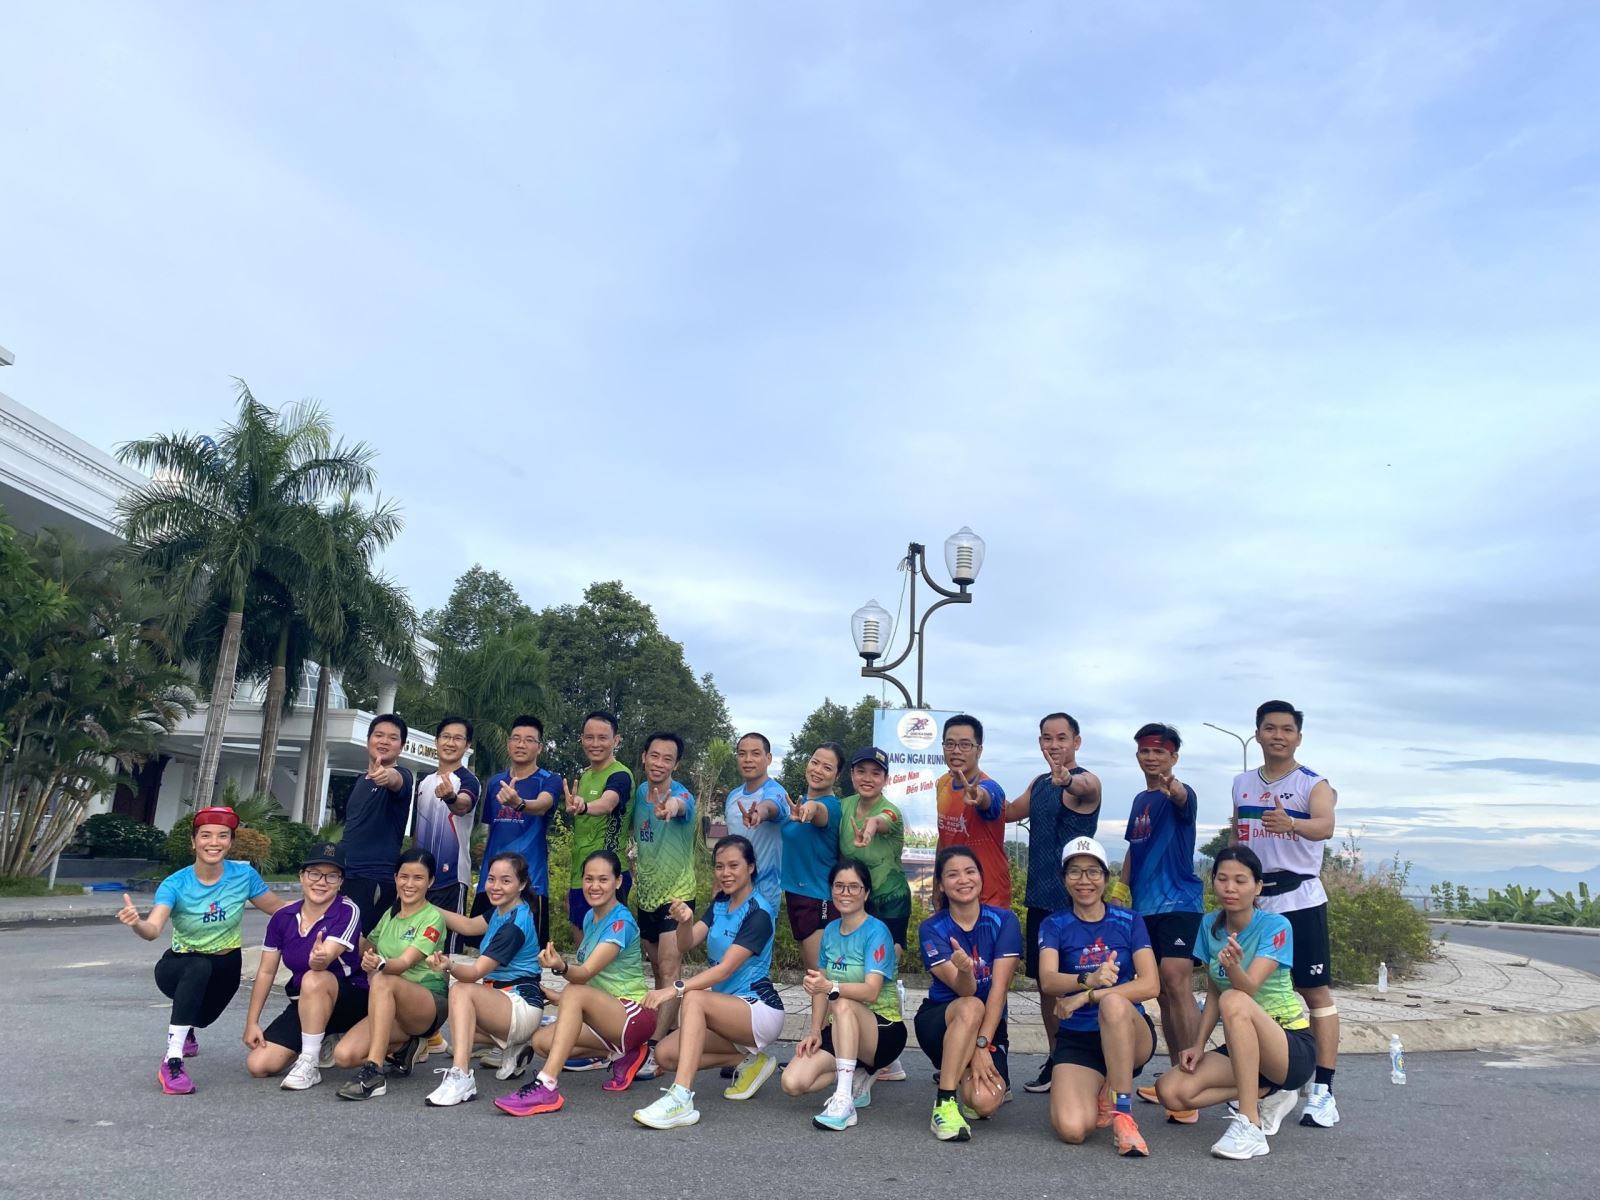 BSR Runners hào hứng tham gia giải chạy “Run For Safety”